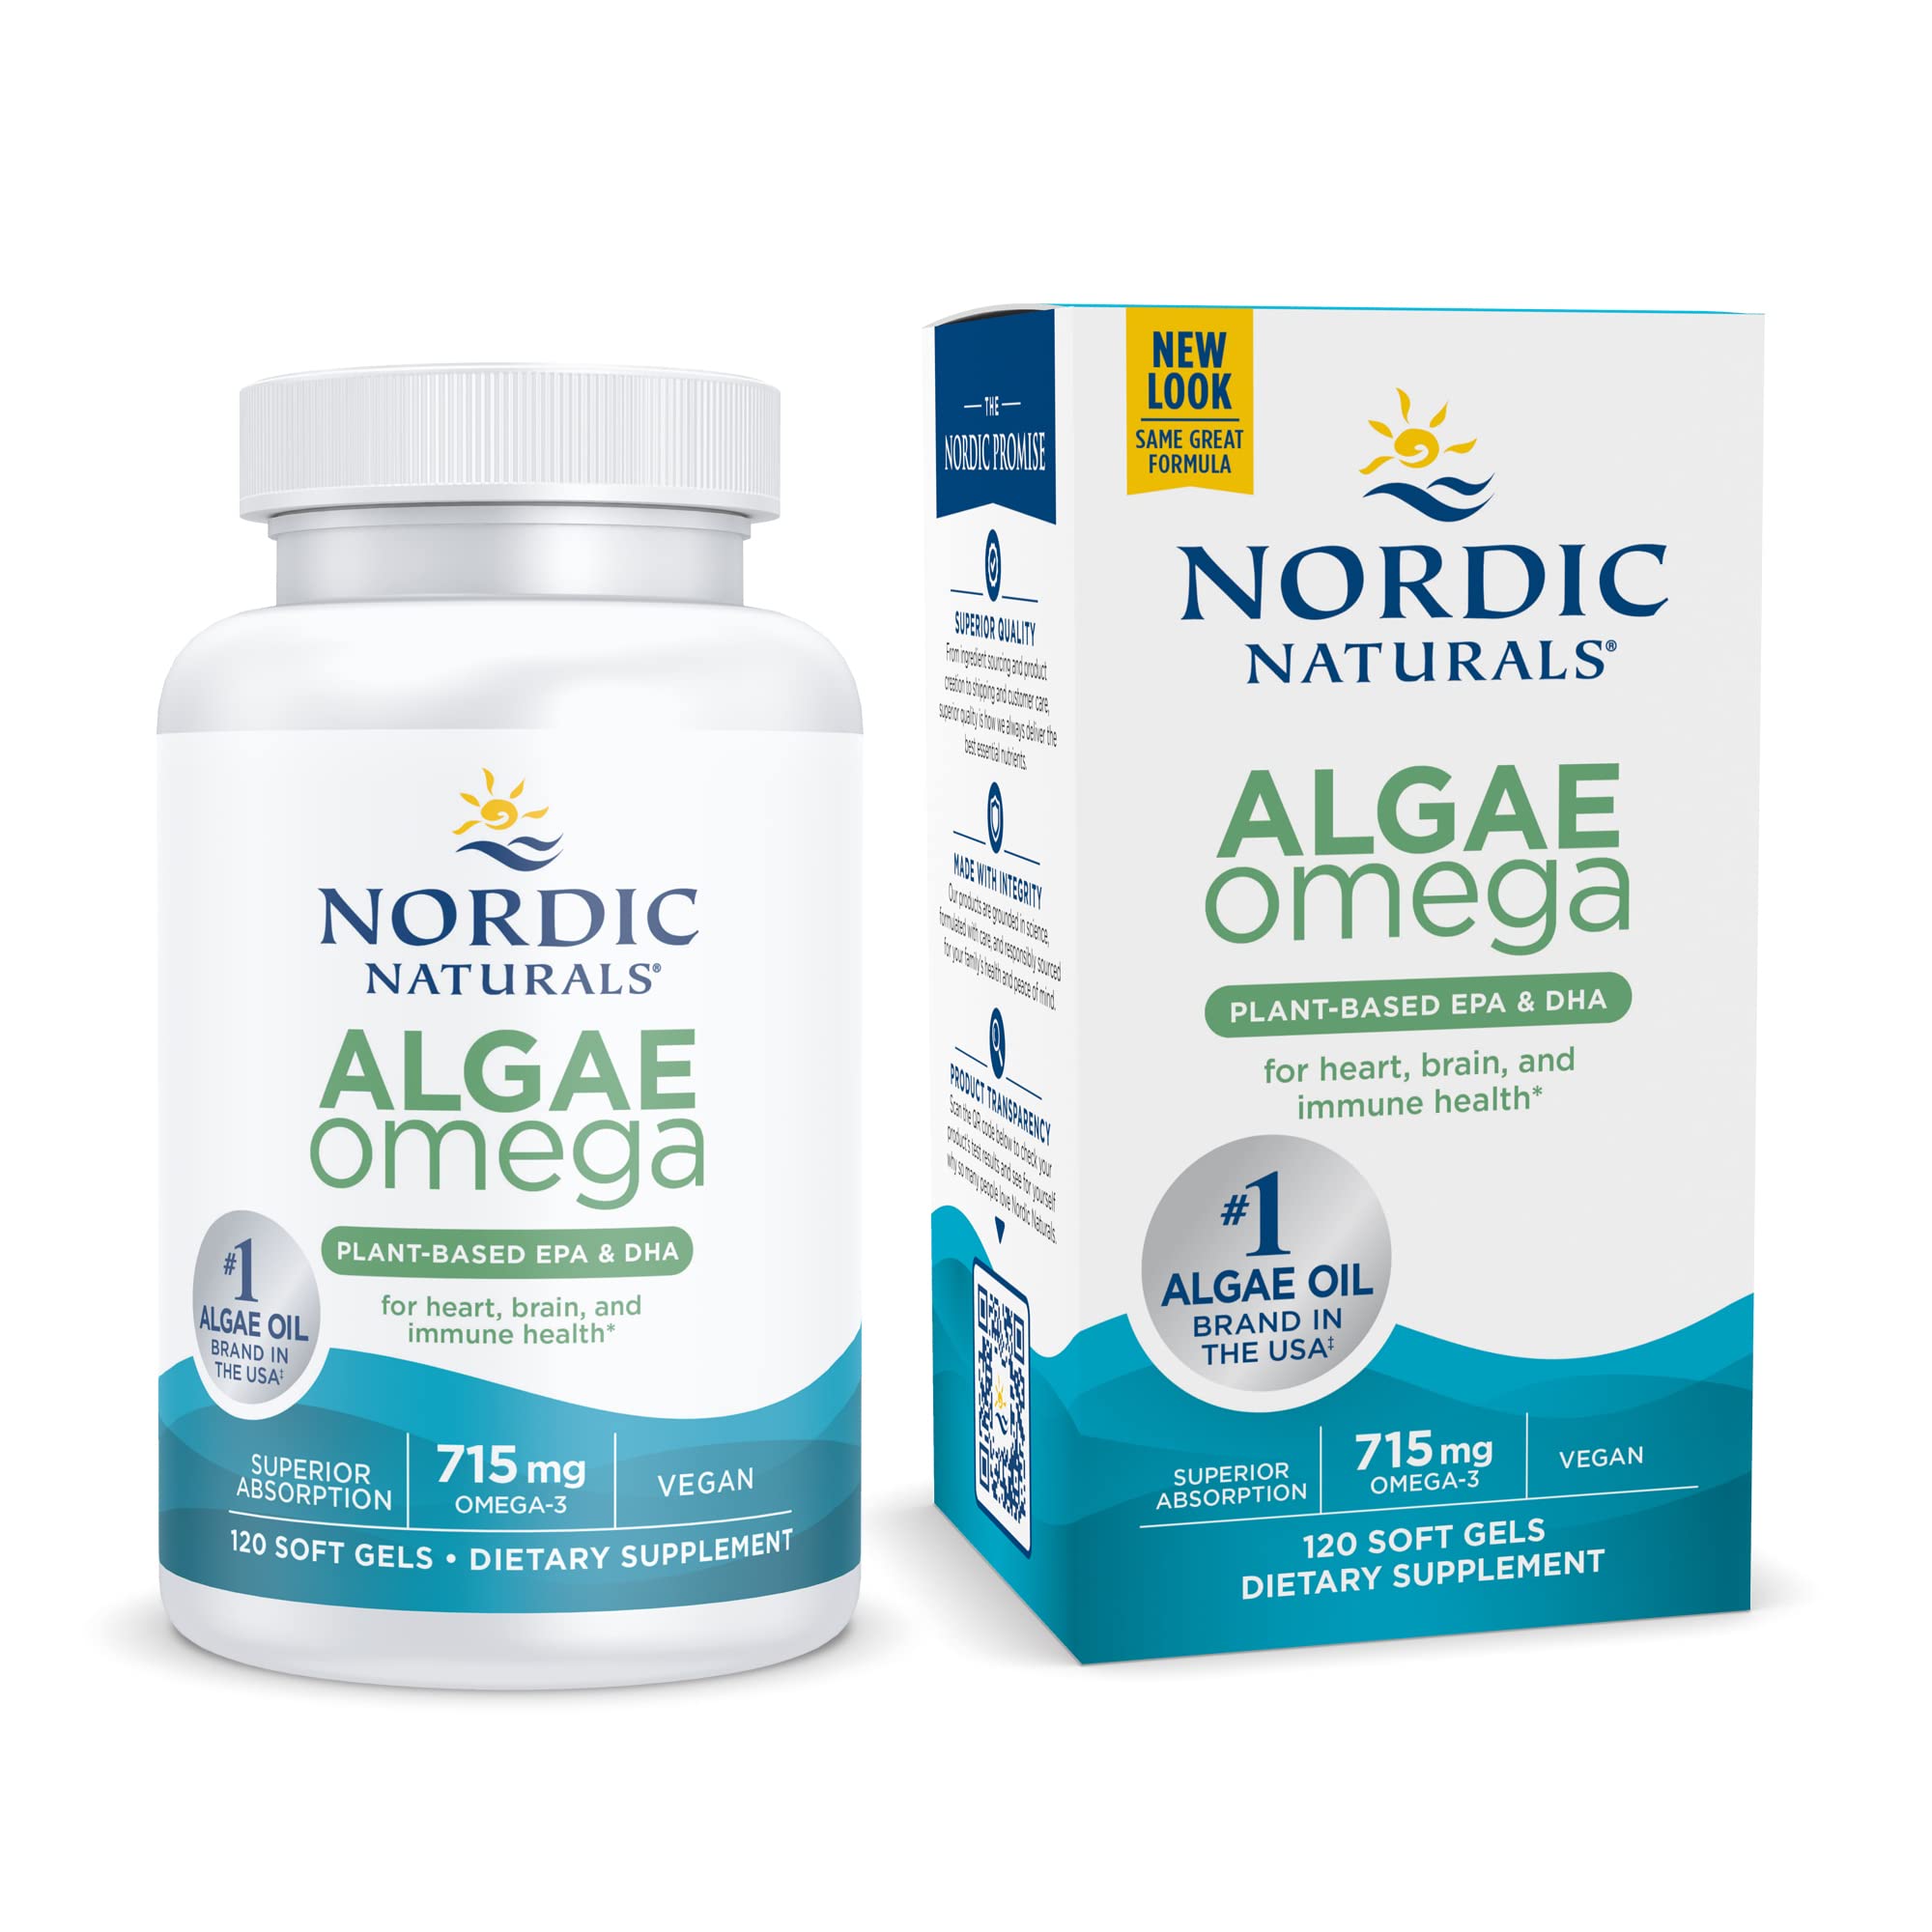 Nordic Naturals vegan supplements